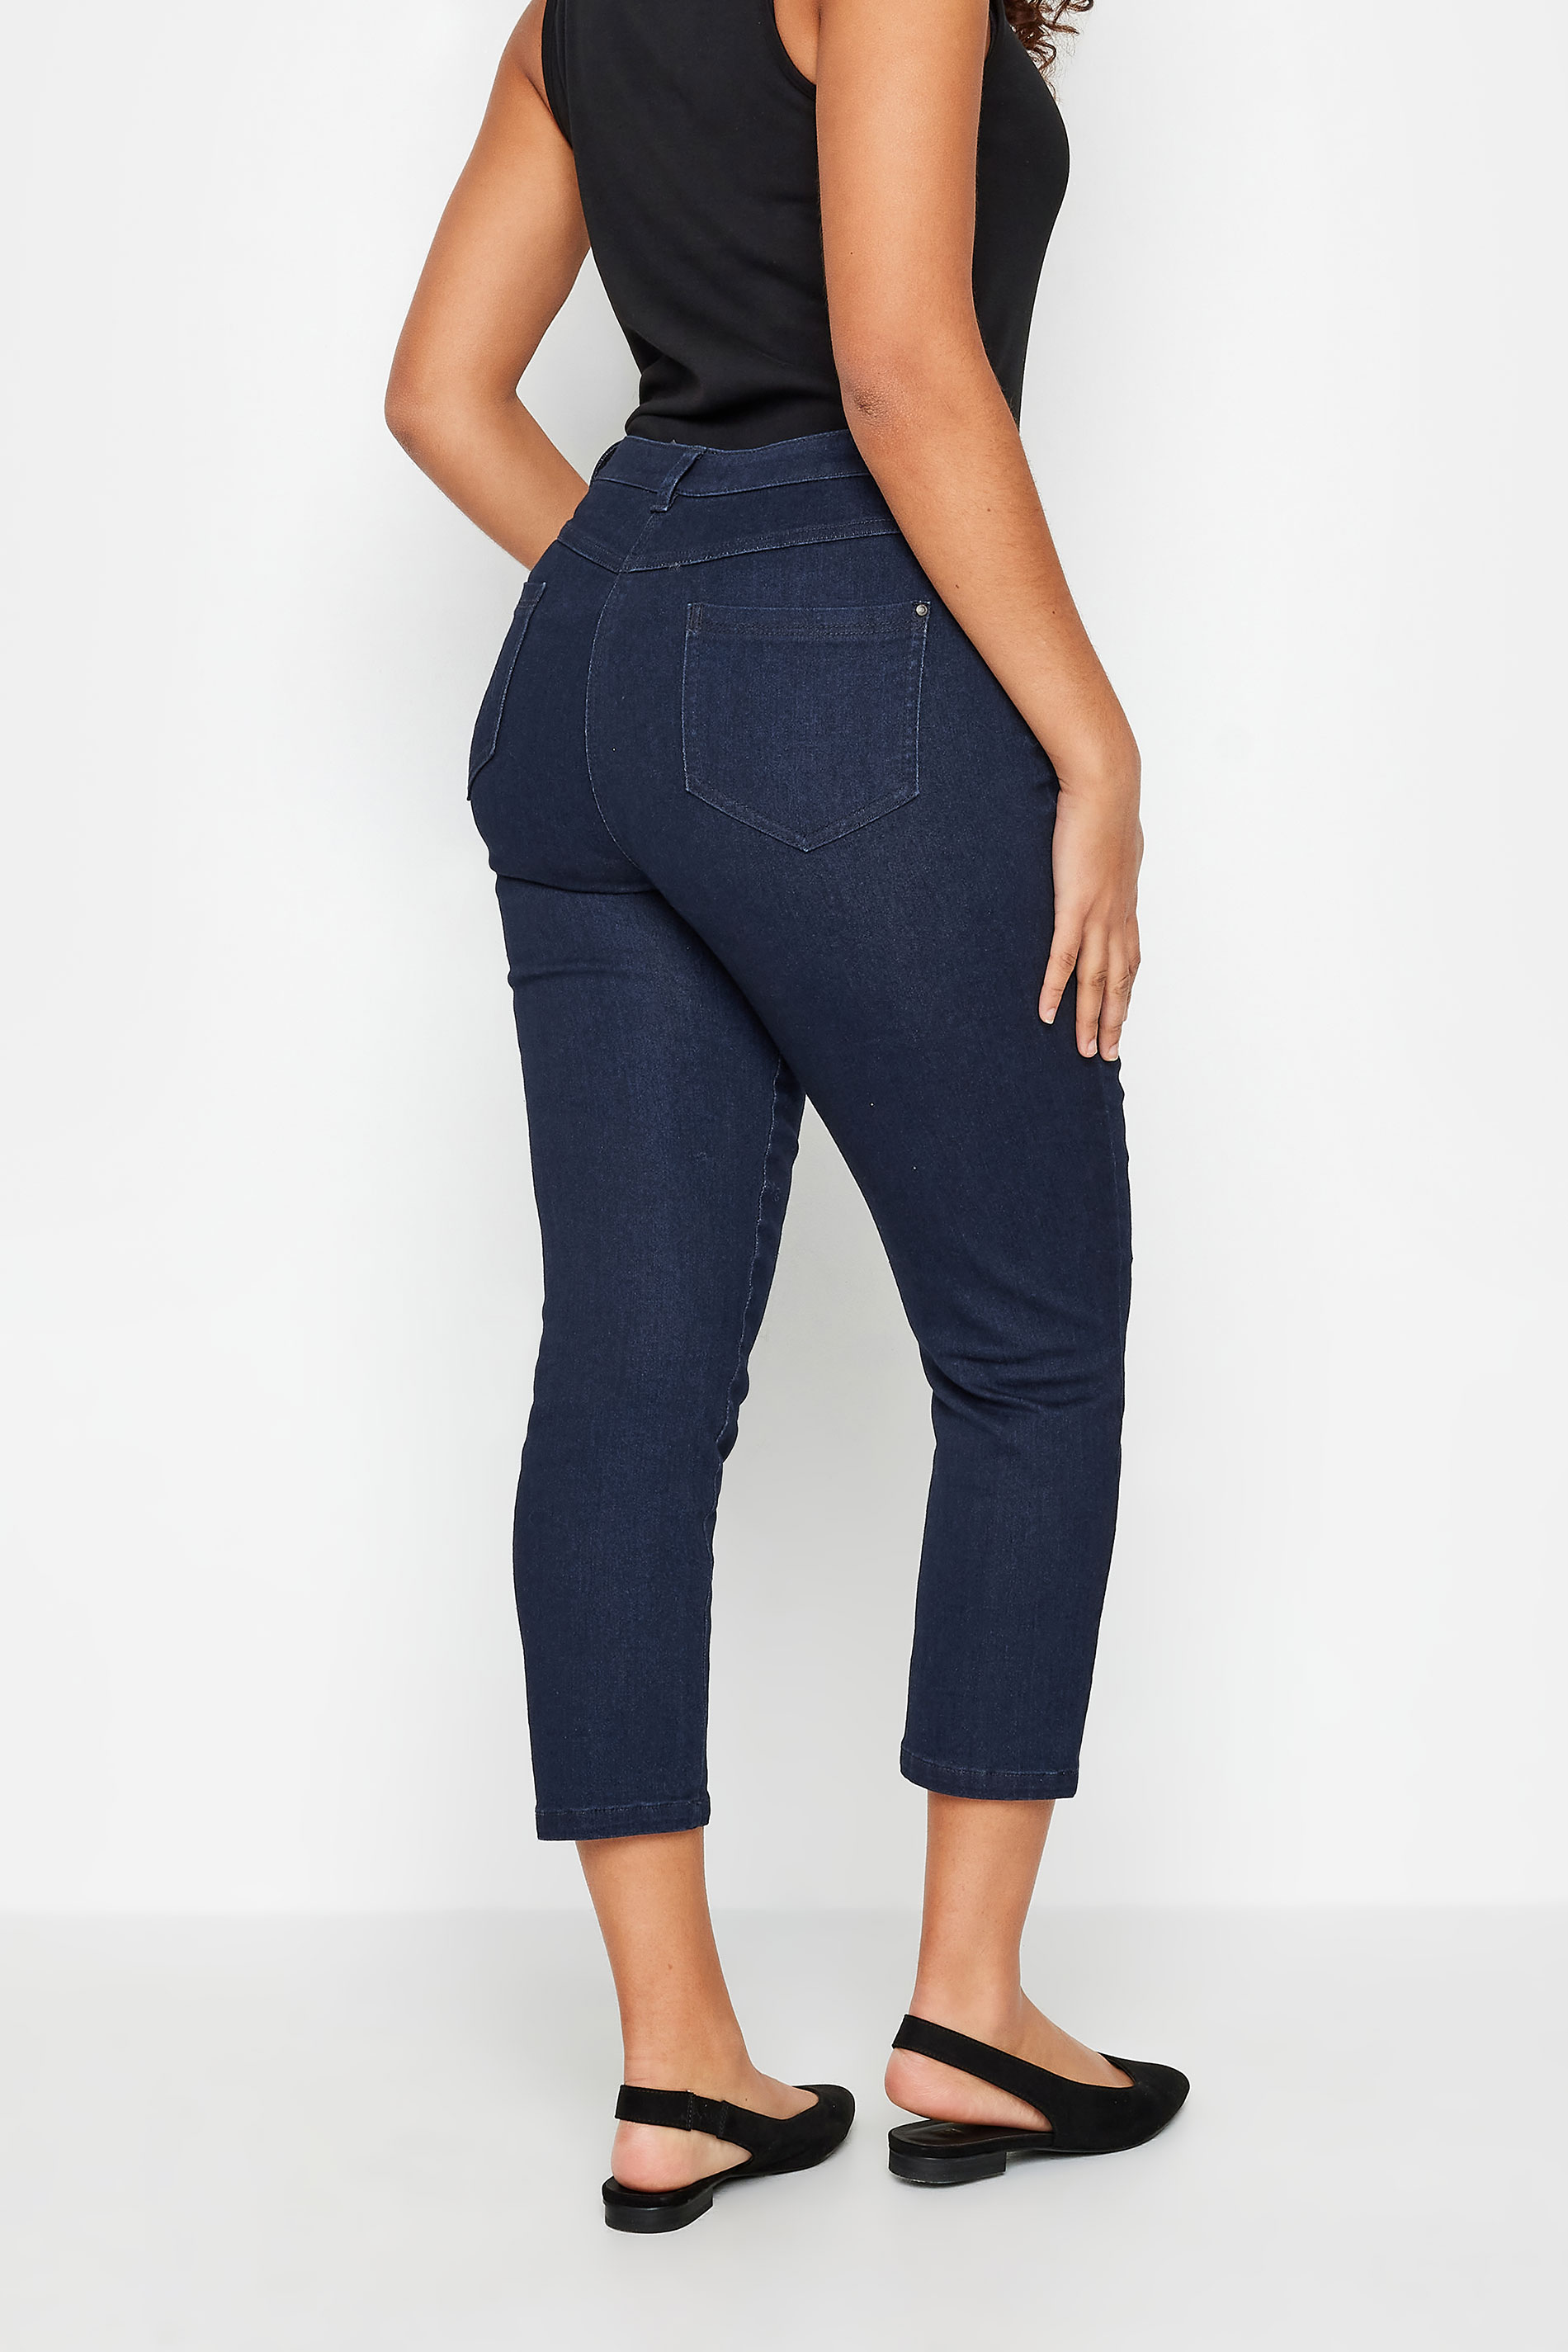 M&Co Indigo Blue Cropped Jeans | M&Co 3